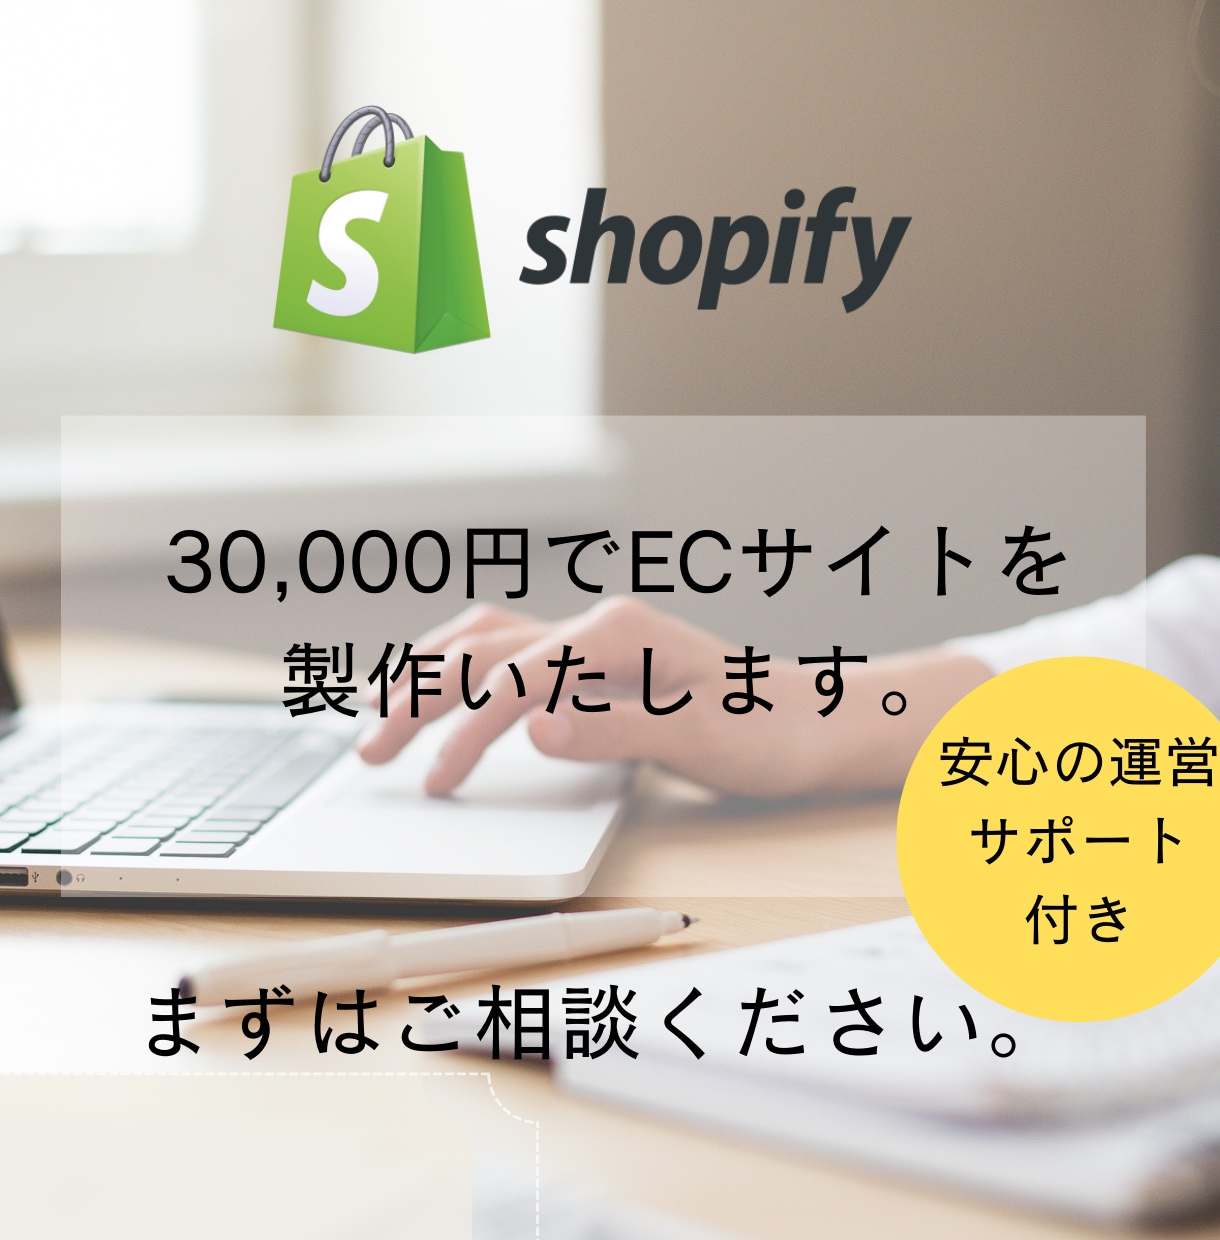 Shopifyで越境ECサイトを作成します ご要望に応じで作成いたします。越境・英語対応可能です。 イメージ1